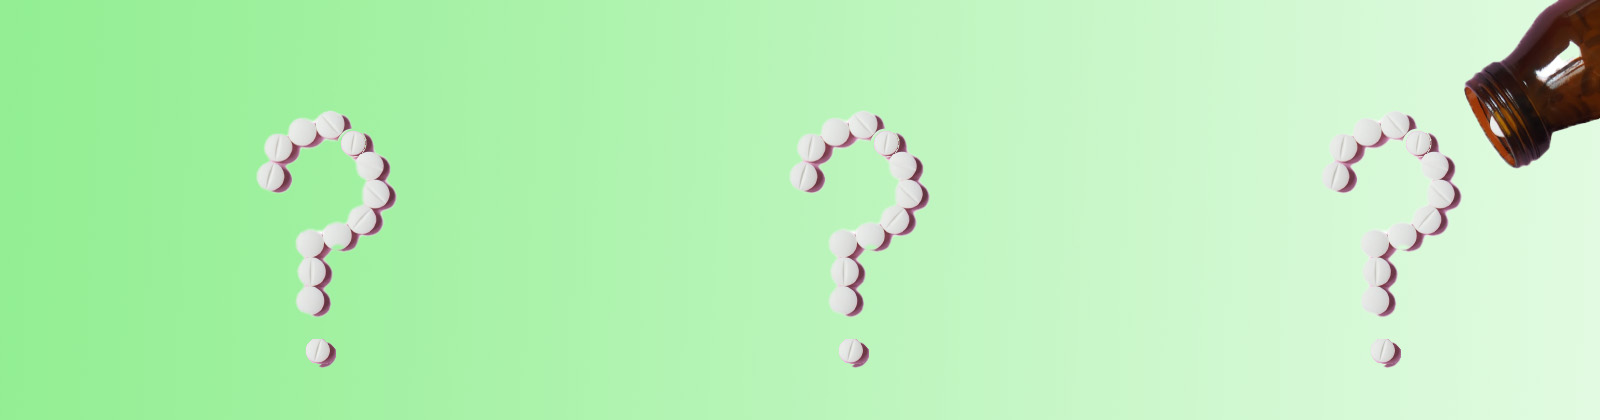 Opioids for pain management shape questions about cannabis-based treatment.